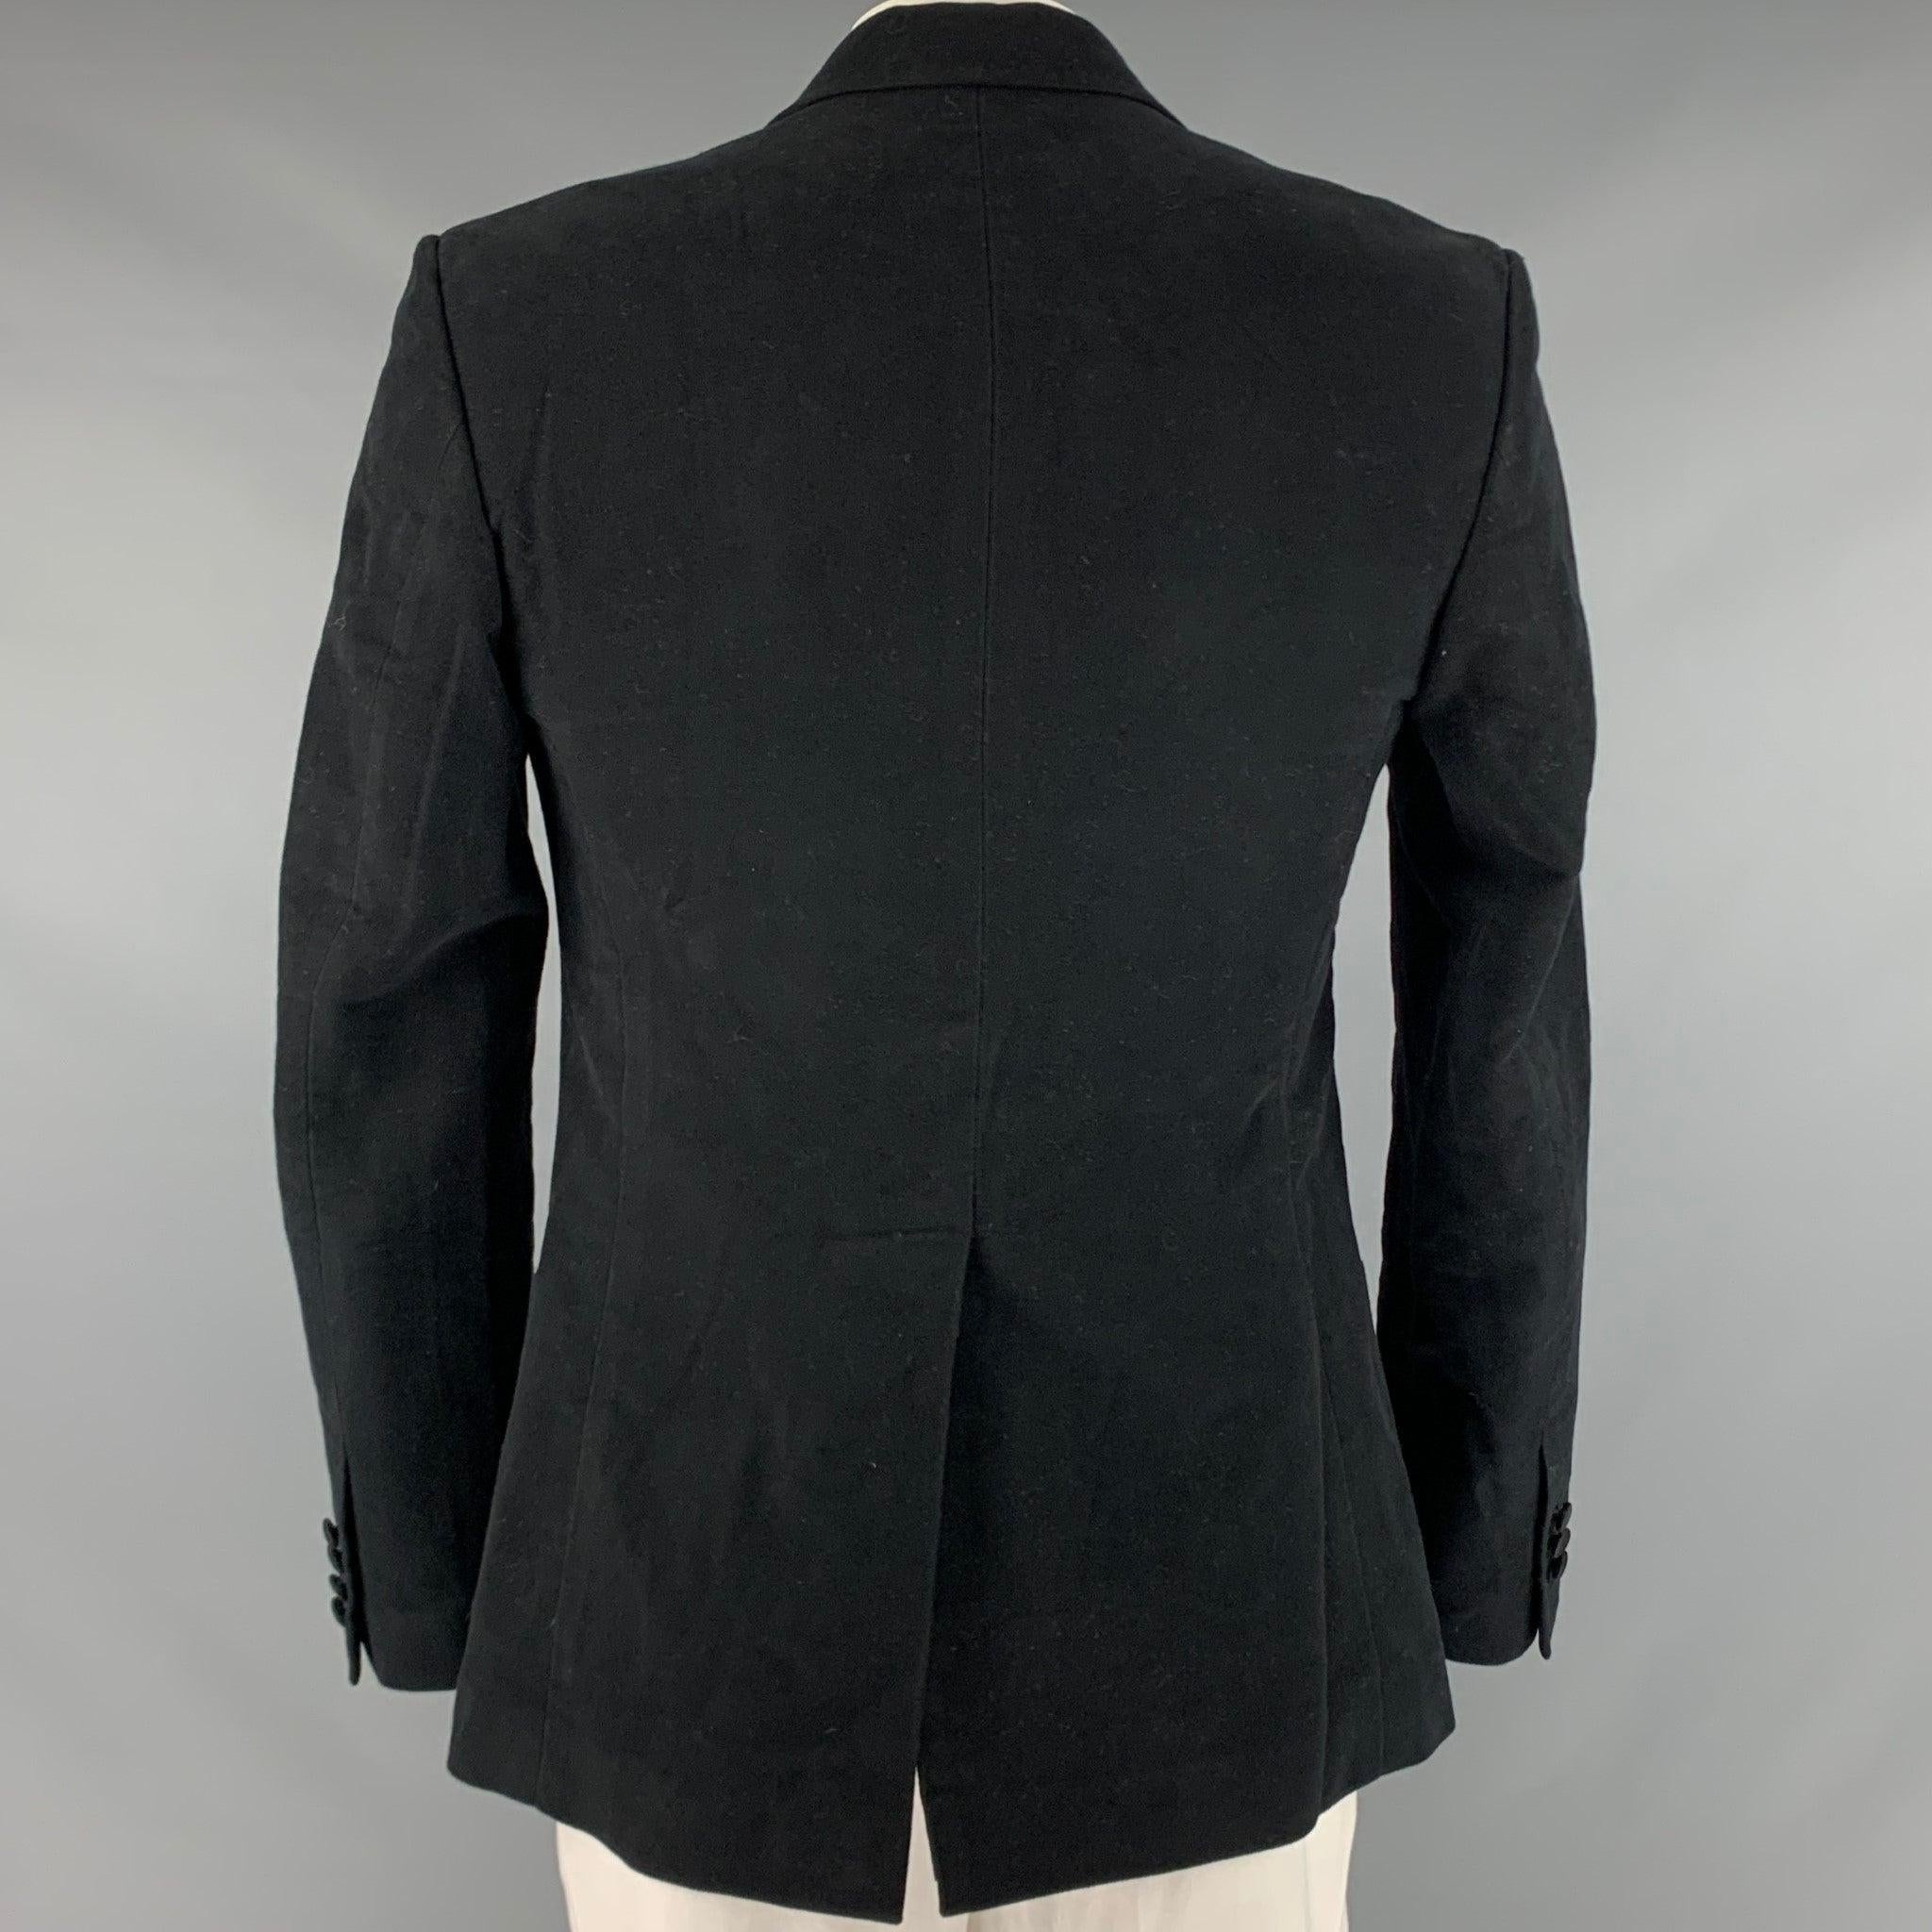 DOLCE & GABBANA Size 42 Black Cotton Blend Peak Lapel Sport Coat In Excellent Condition For Sale In San Francisco, CA